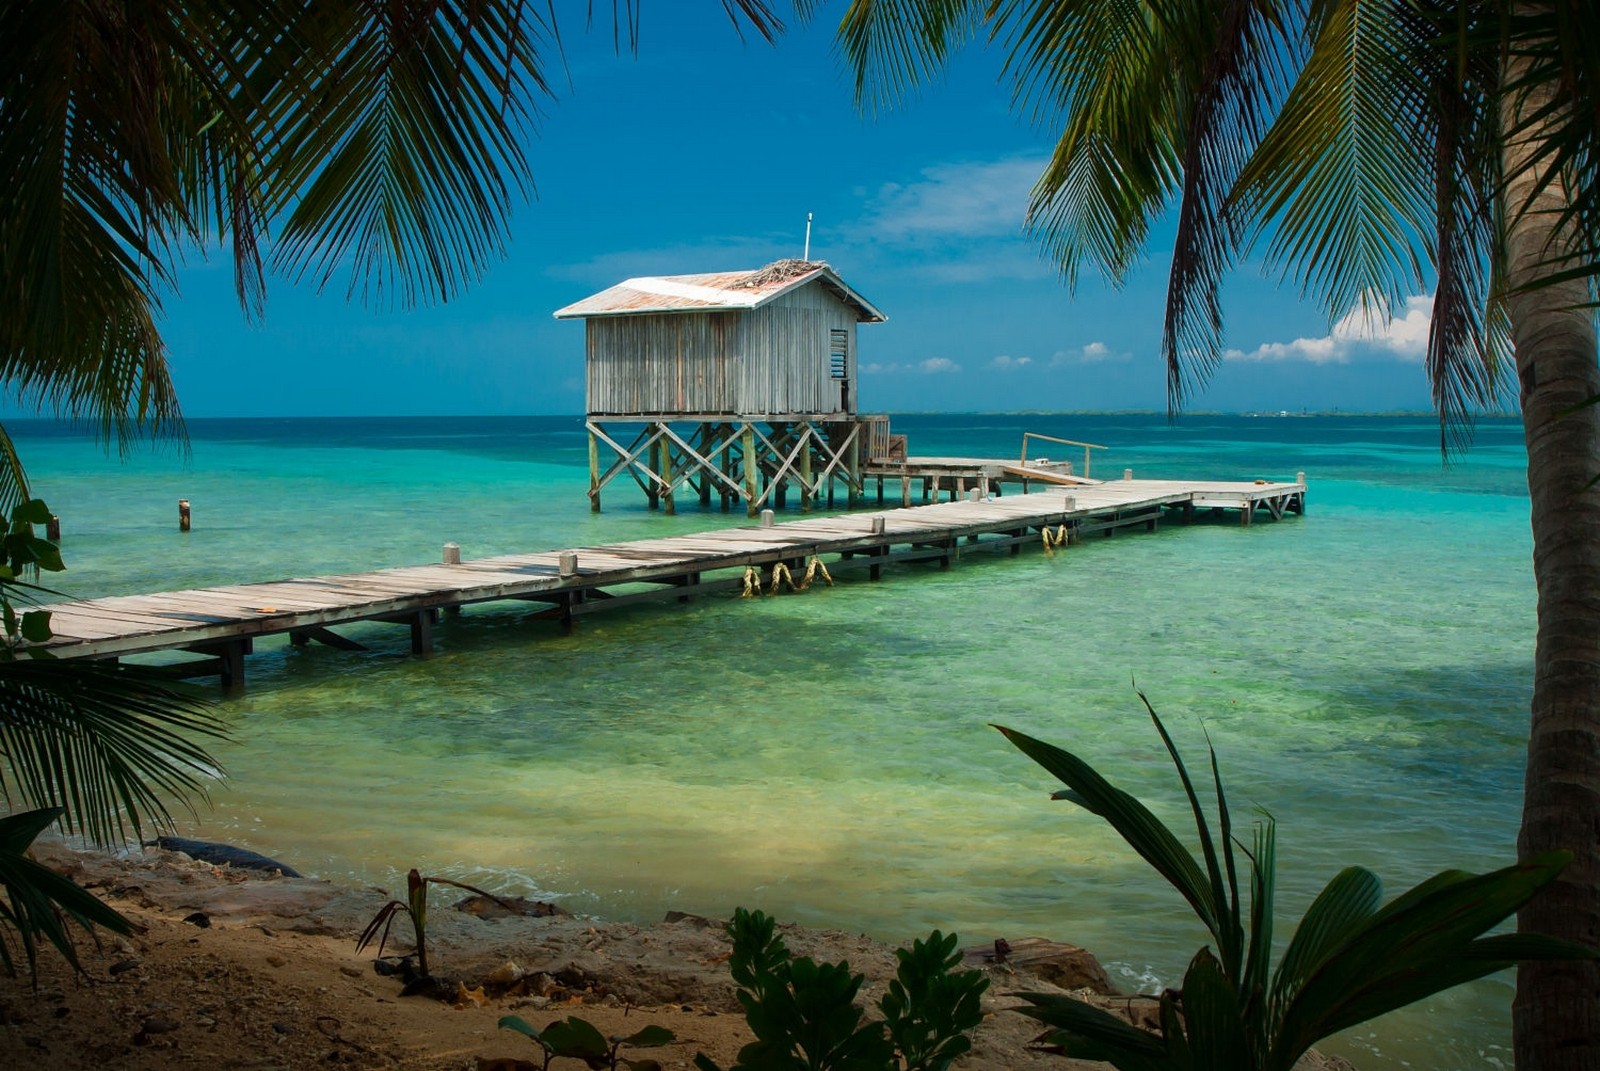 General 1600x1071 nature photography Caribbean sea dock hut beach palm trees tropical Belize pier sky